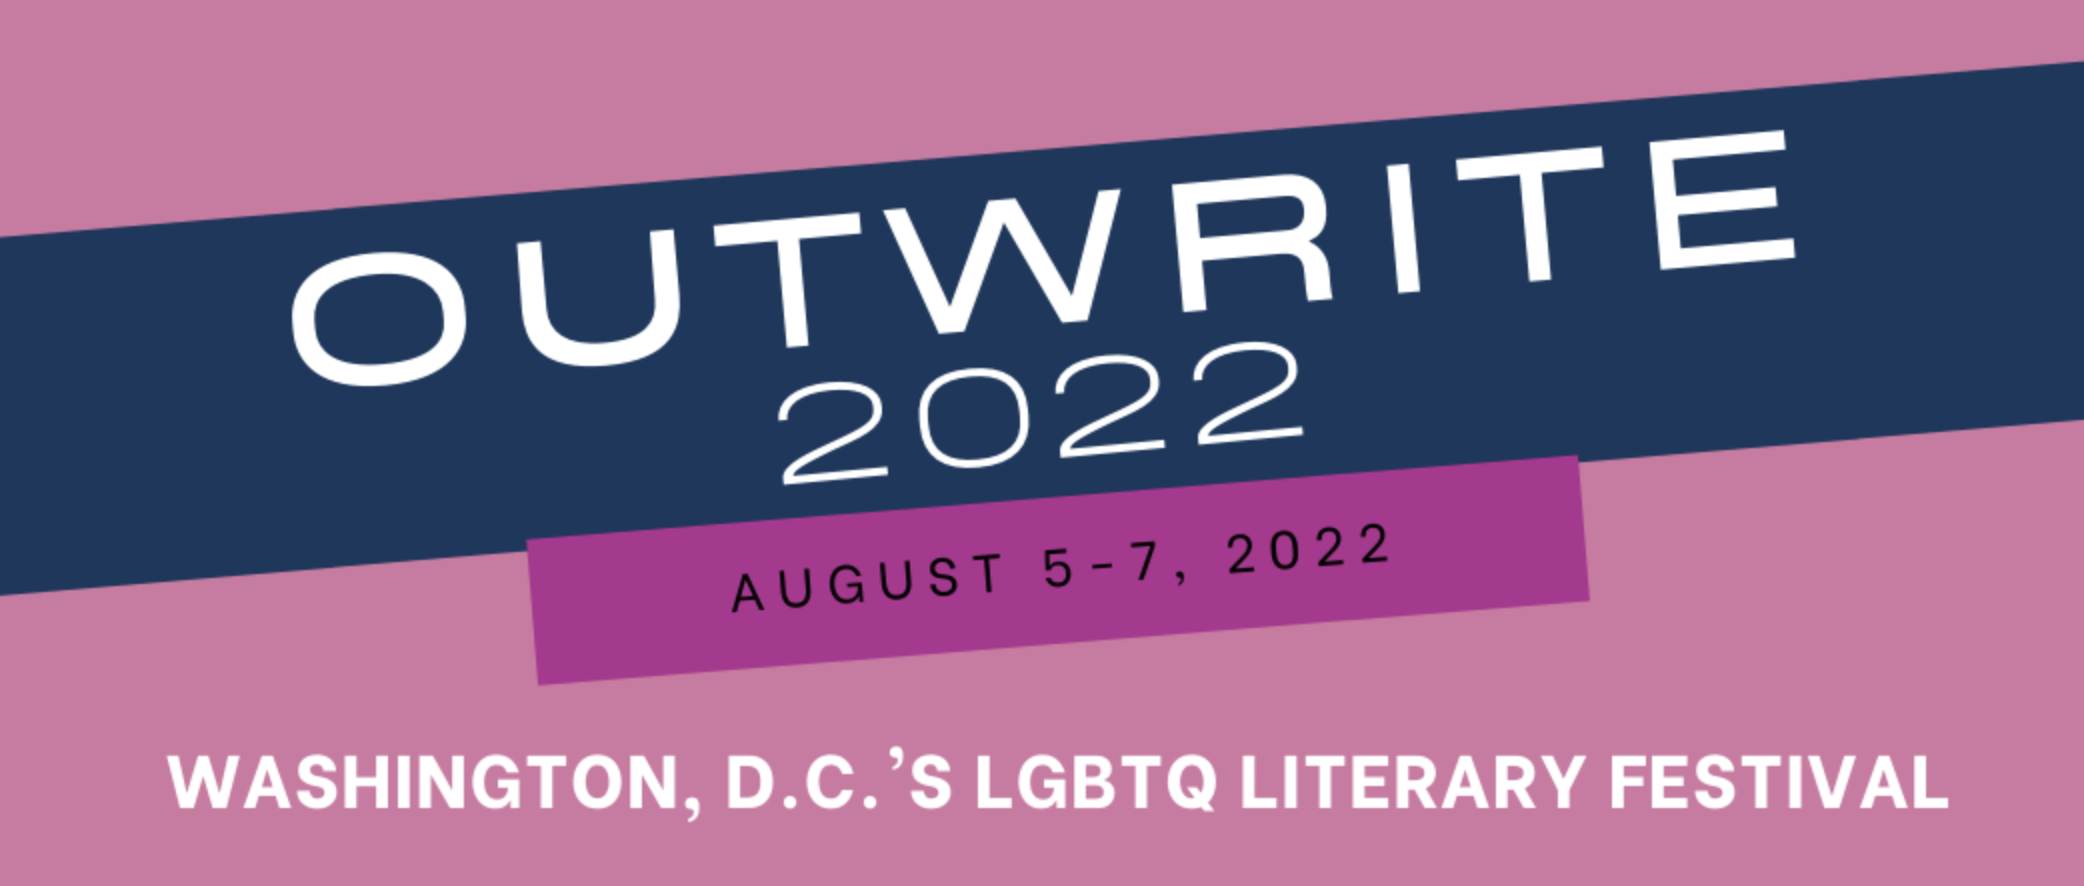 OutWrite LGBTQ Literary Festival